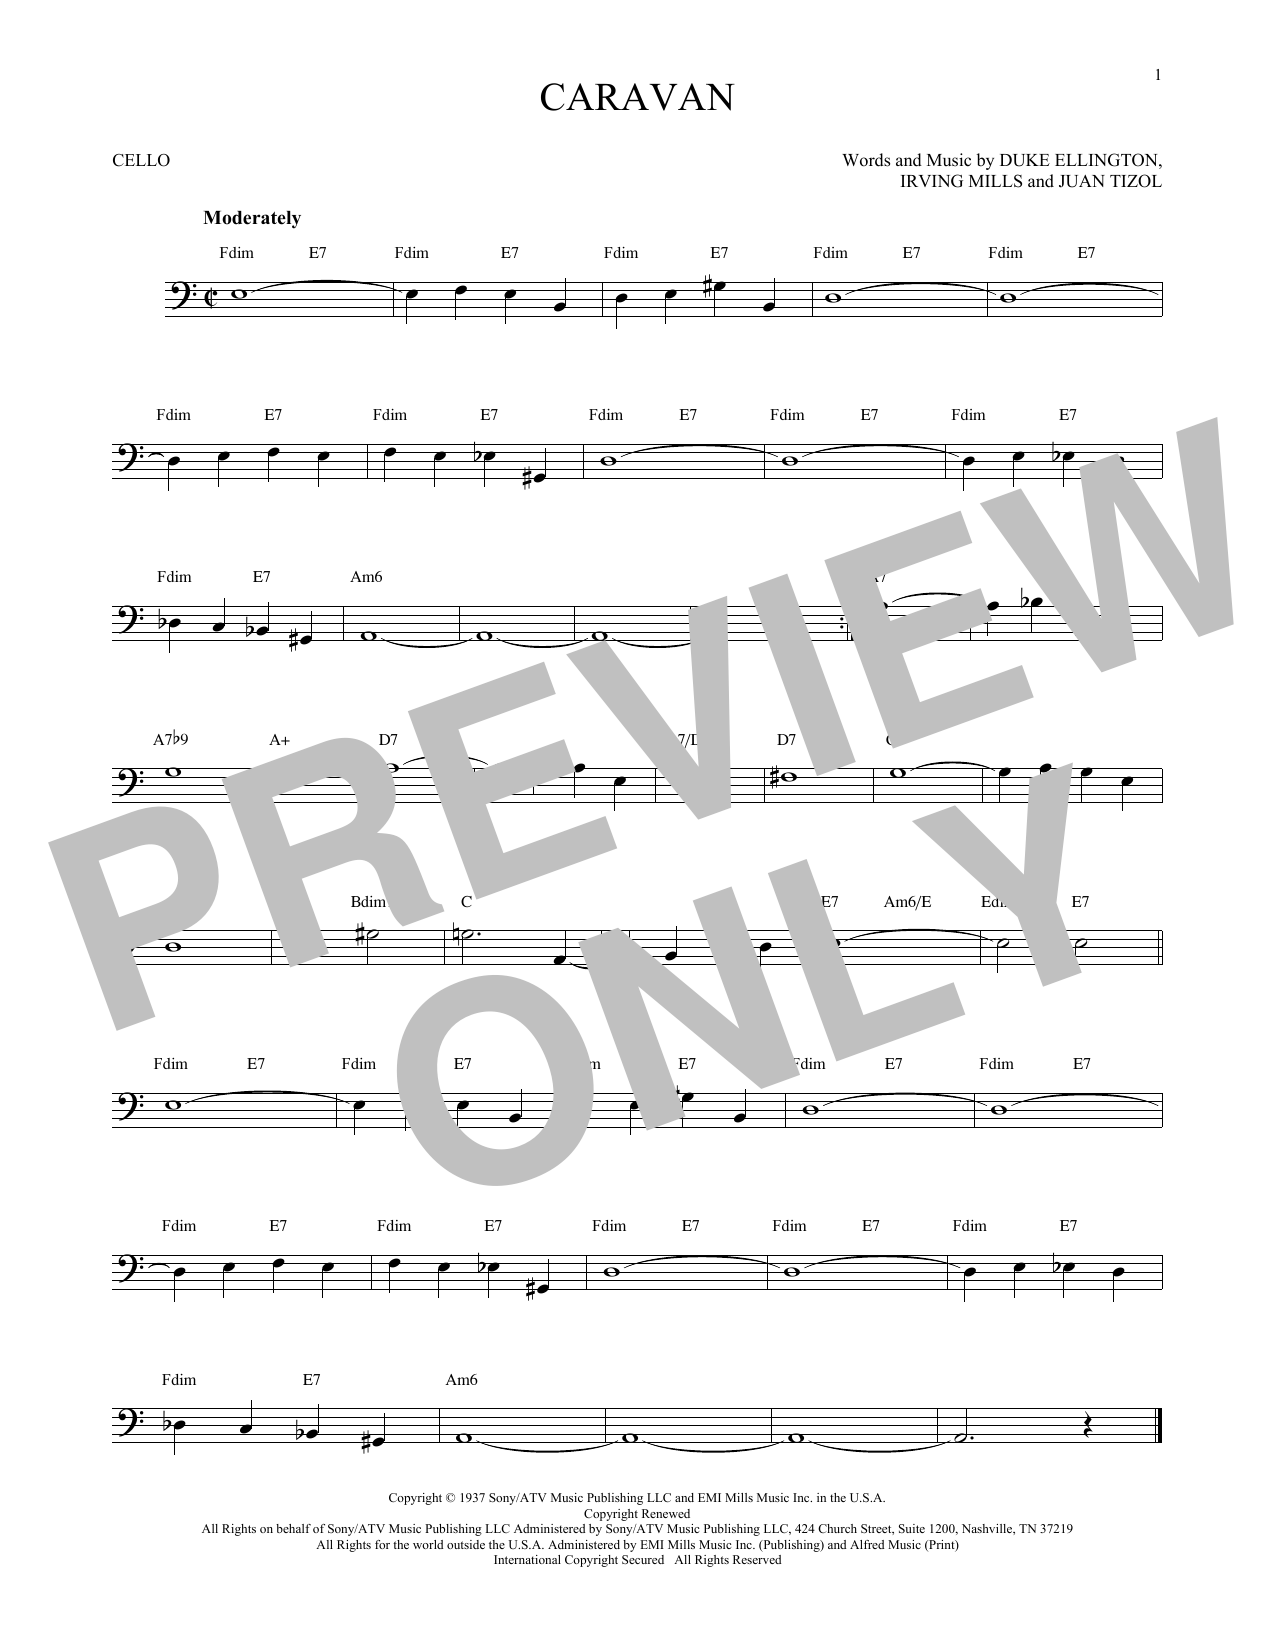 Juan Tizol & Duke Ellington Caravan Sheet Music Notes & Chords for Alto Saxophone - Download or Print PDF